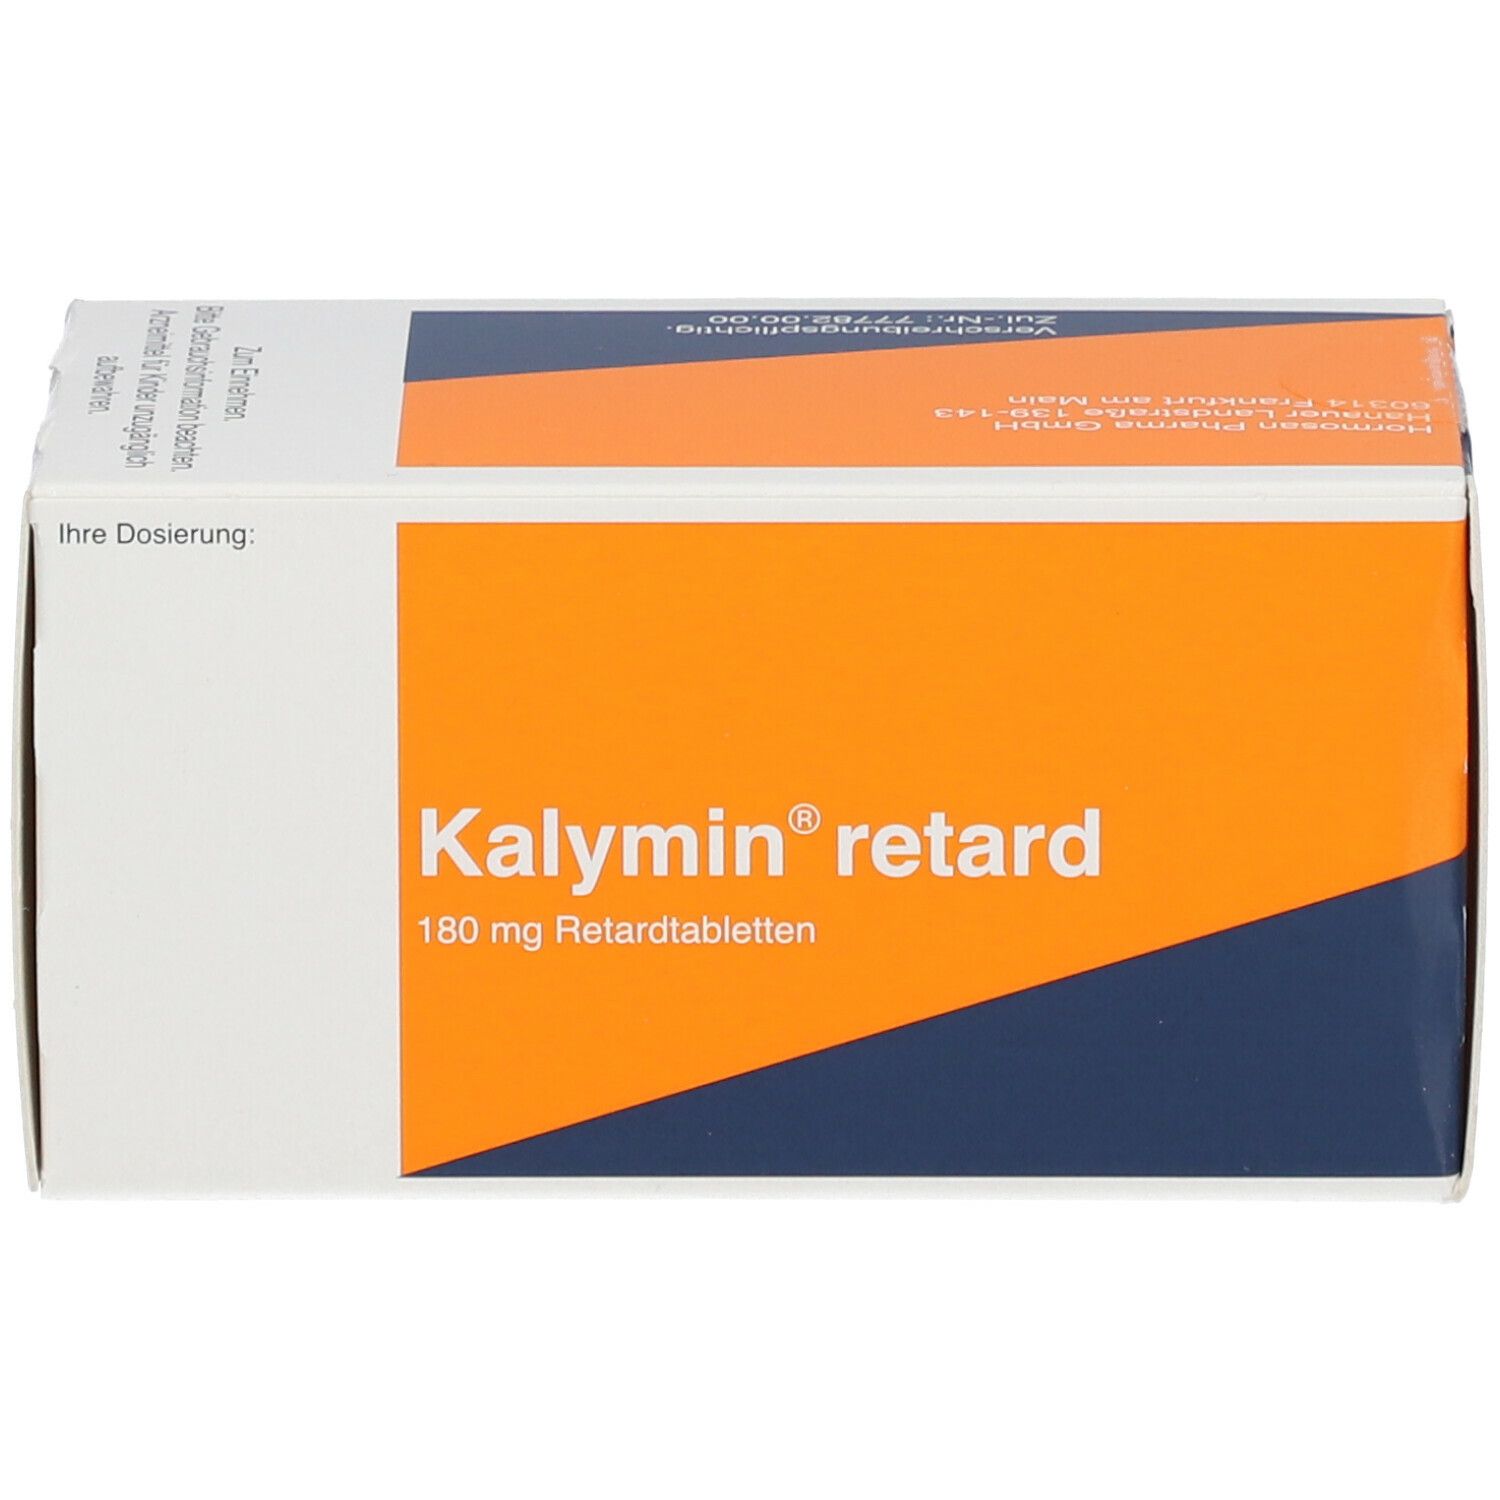 Kalymin® retard 180 mg